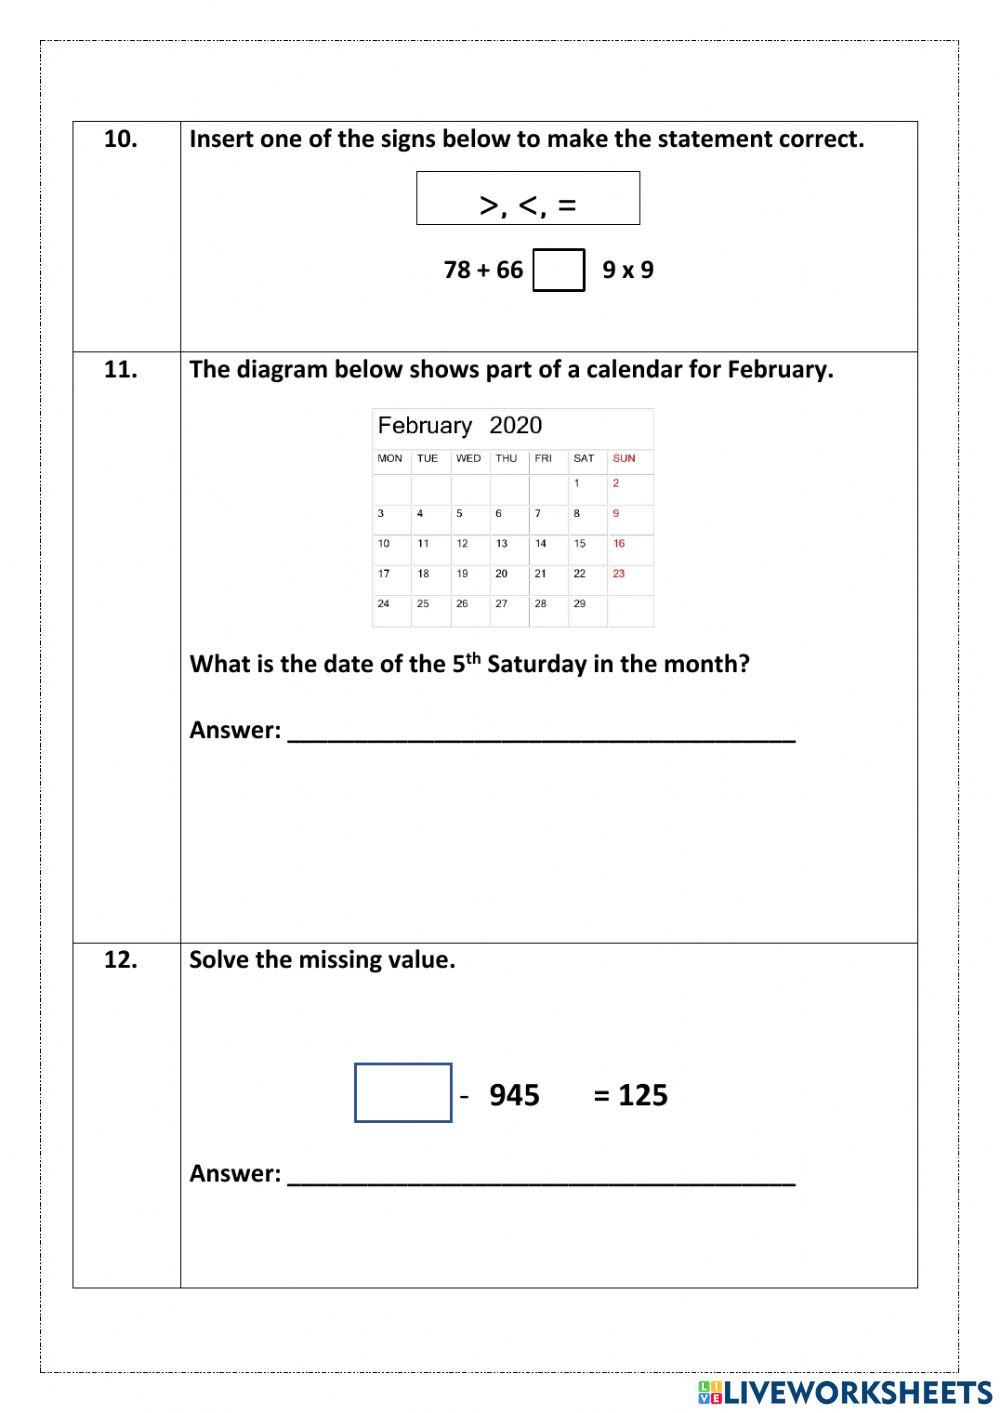 Mathematics Practice Test 4